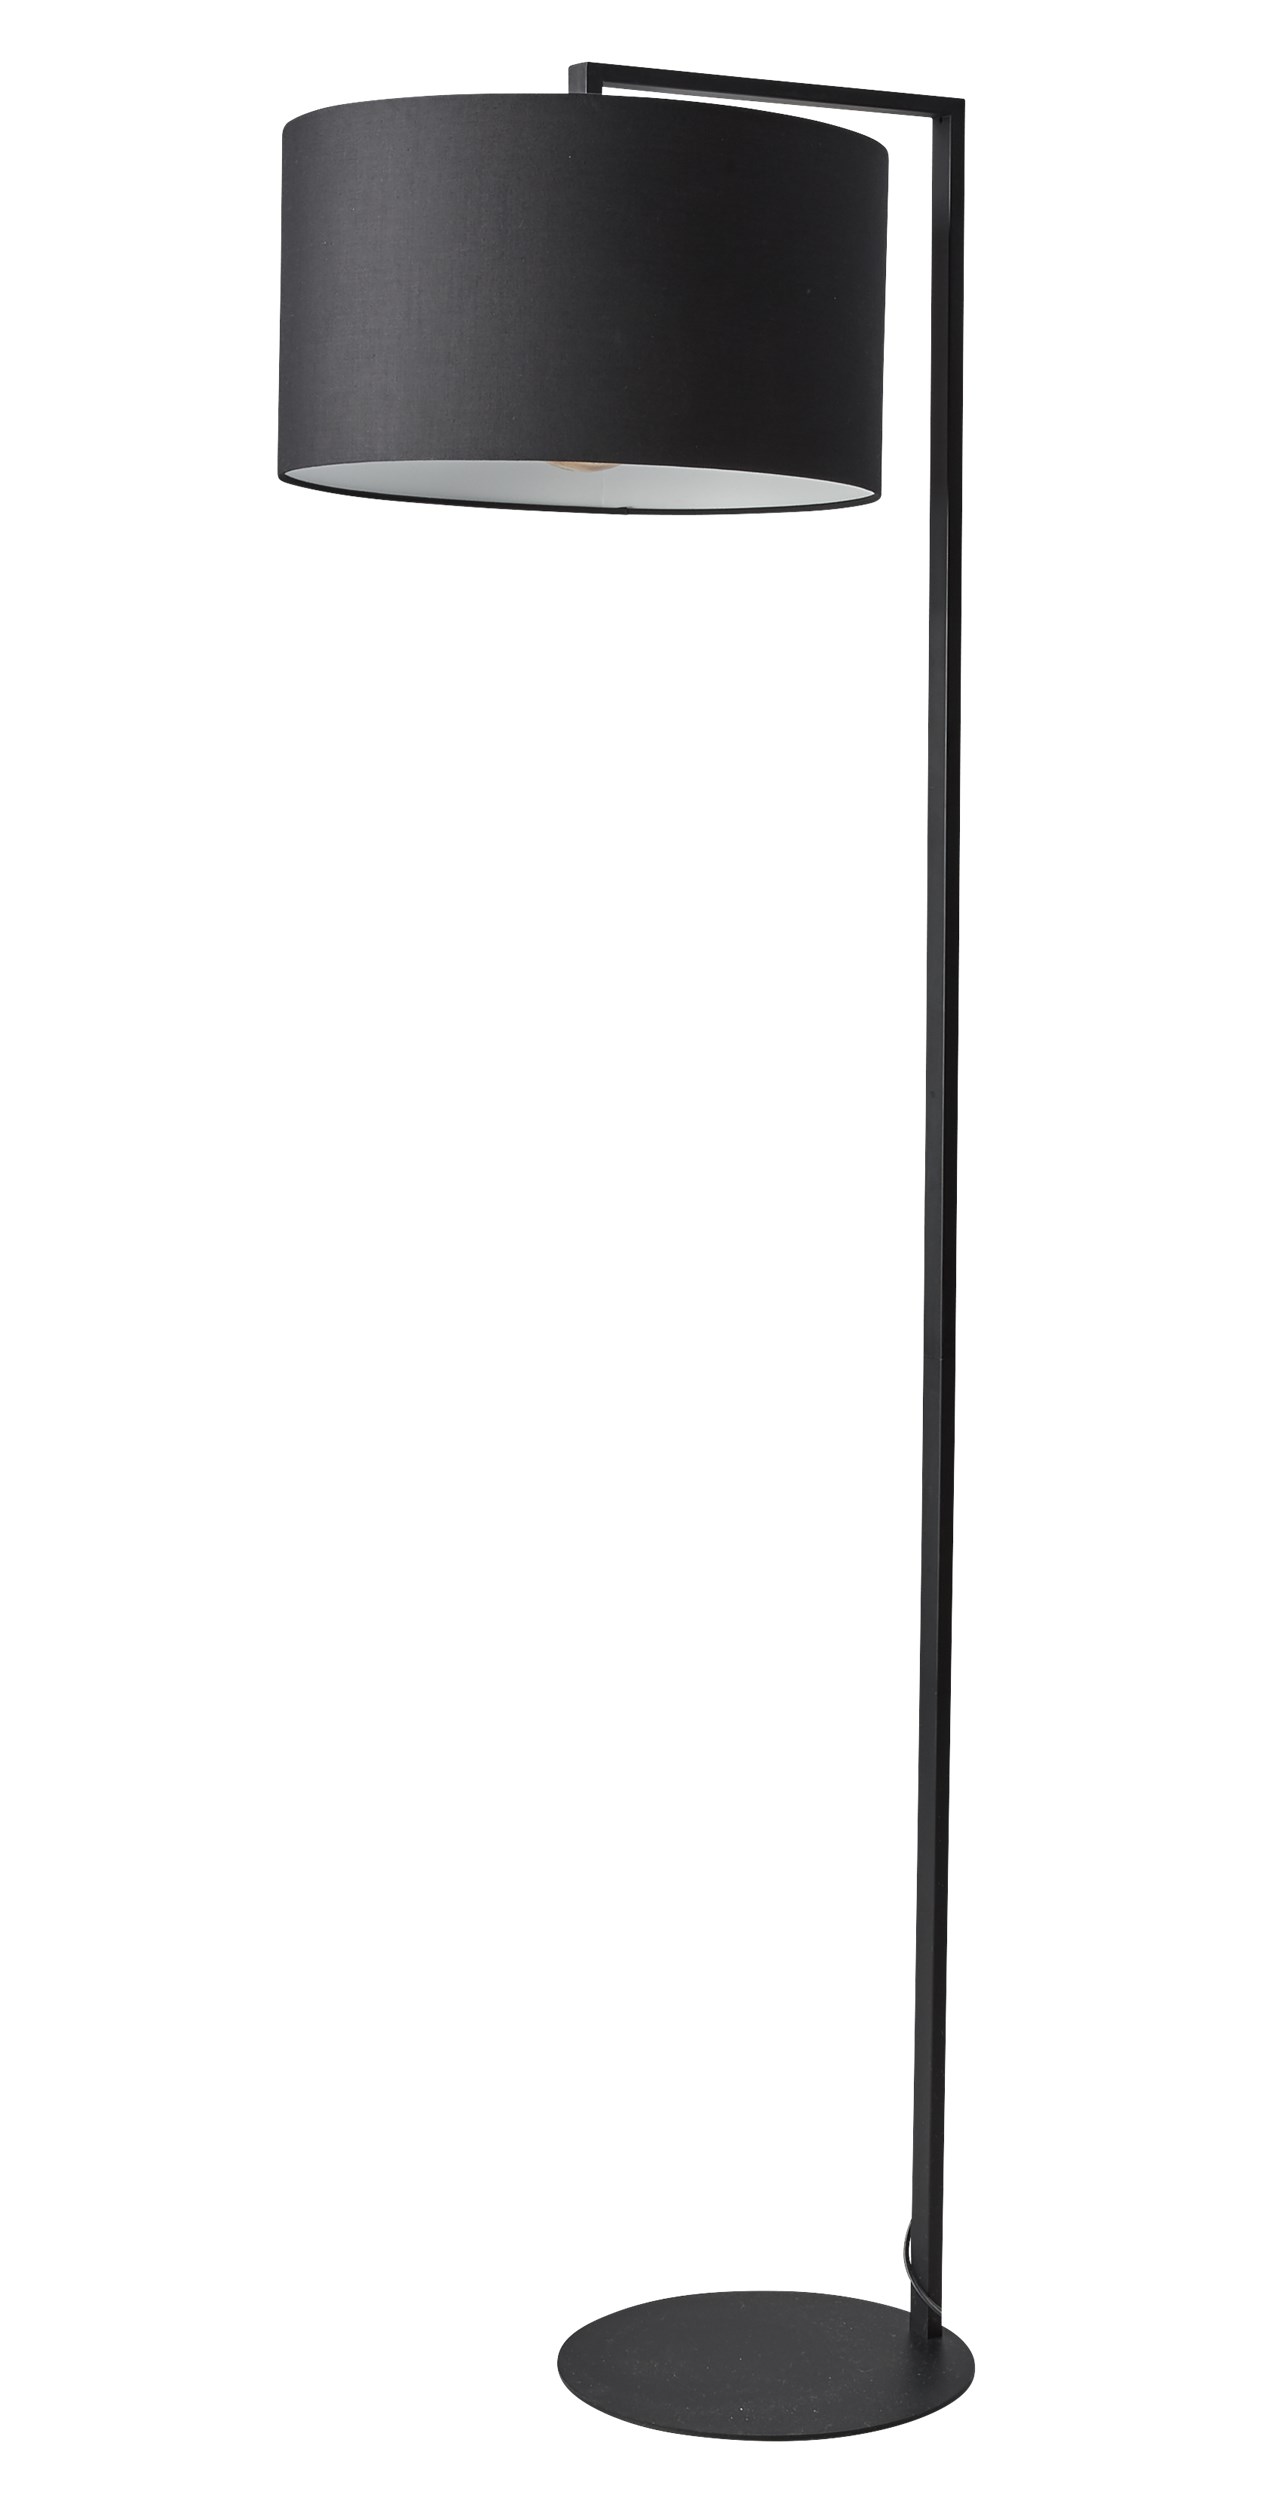 Felipe Golvlampa 160 x 40 cm - Svart tygskärm och black metal base